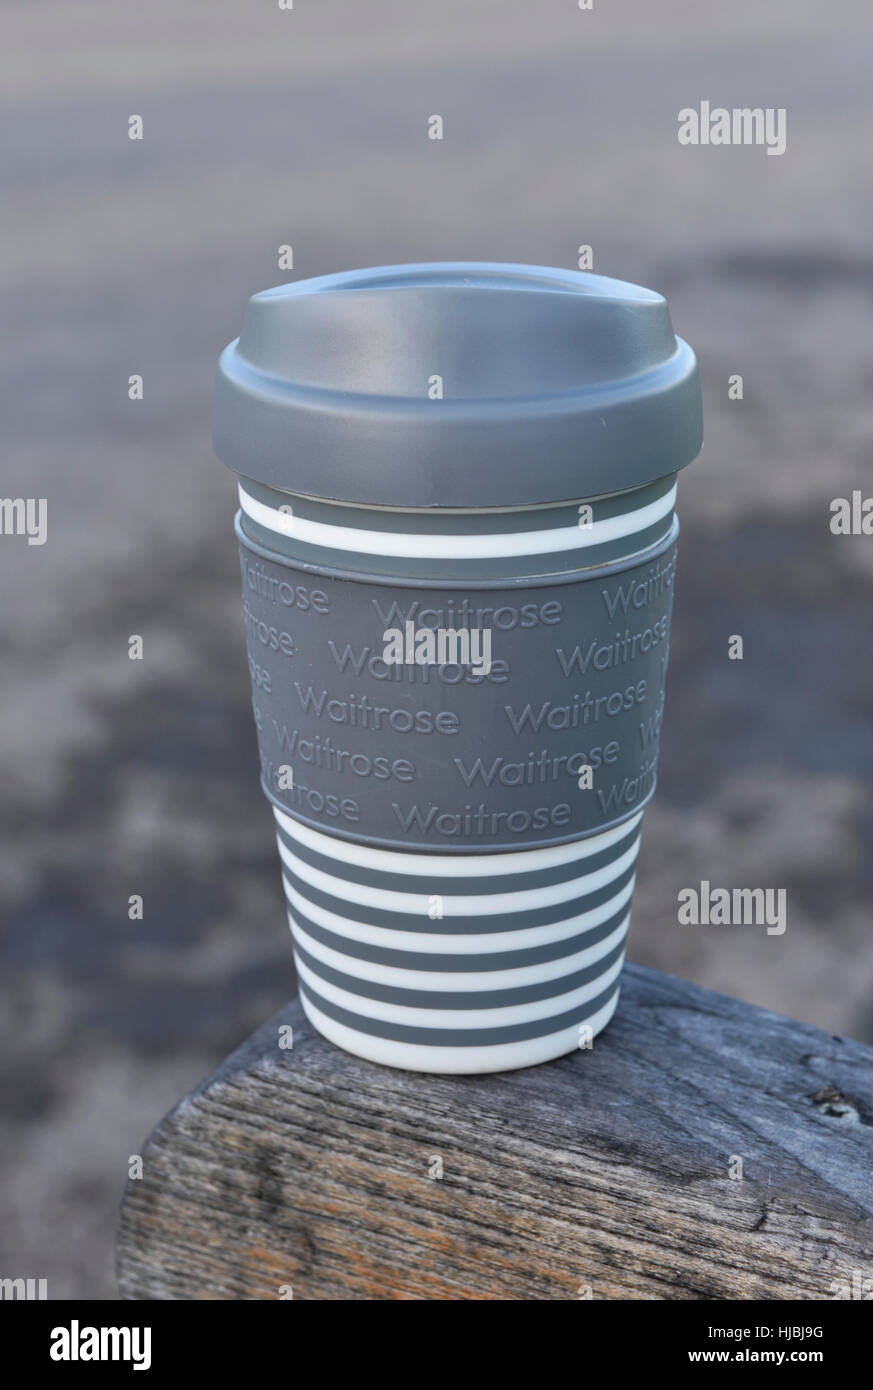 https://c8.alamy.com/comp/HJBJ9G/waitrose-reusable-or-sustainable-plastic-take-away-coffee-cup-or-travel-HJBJ9G.jpg